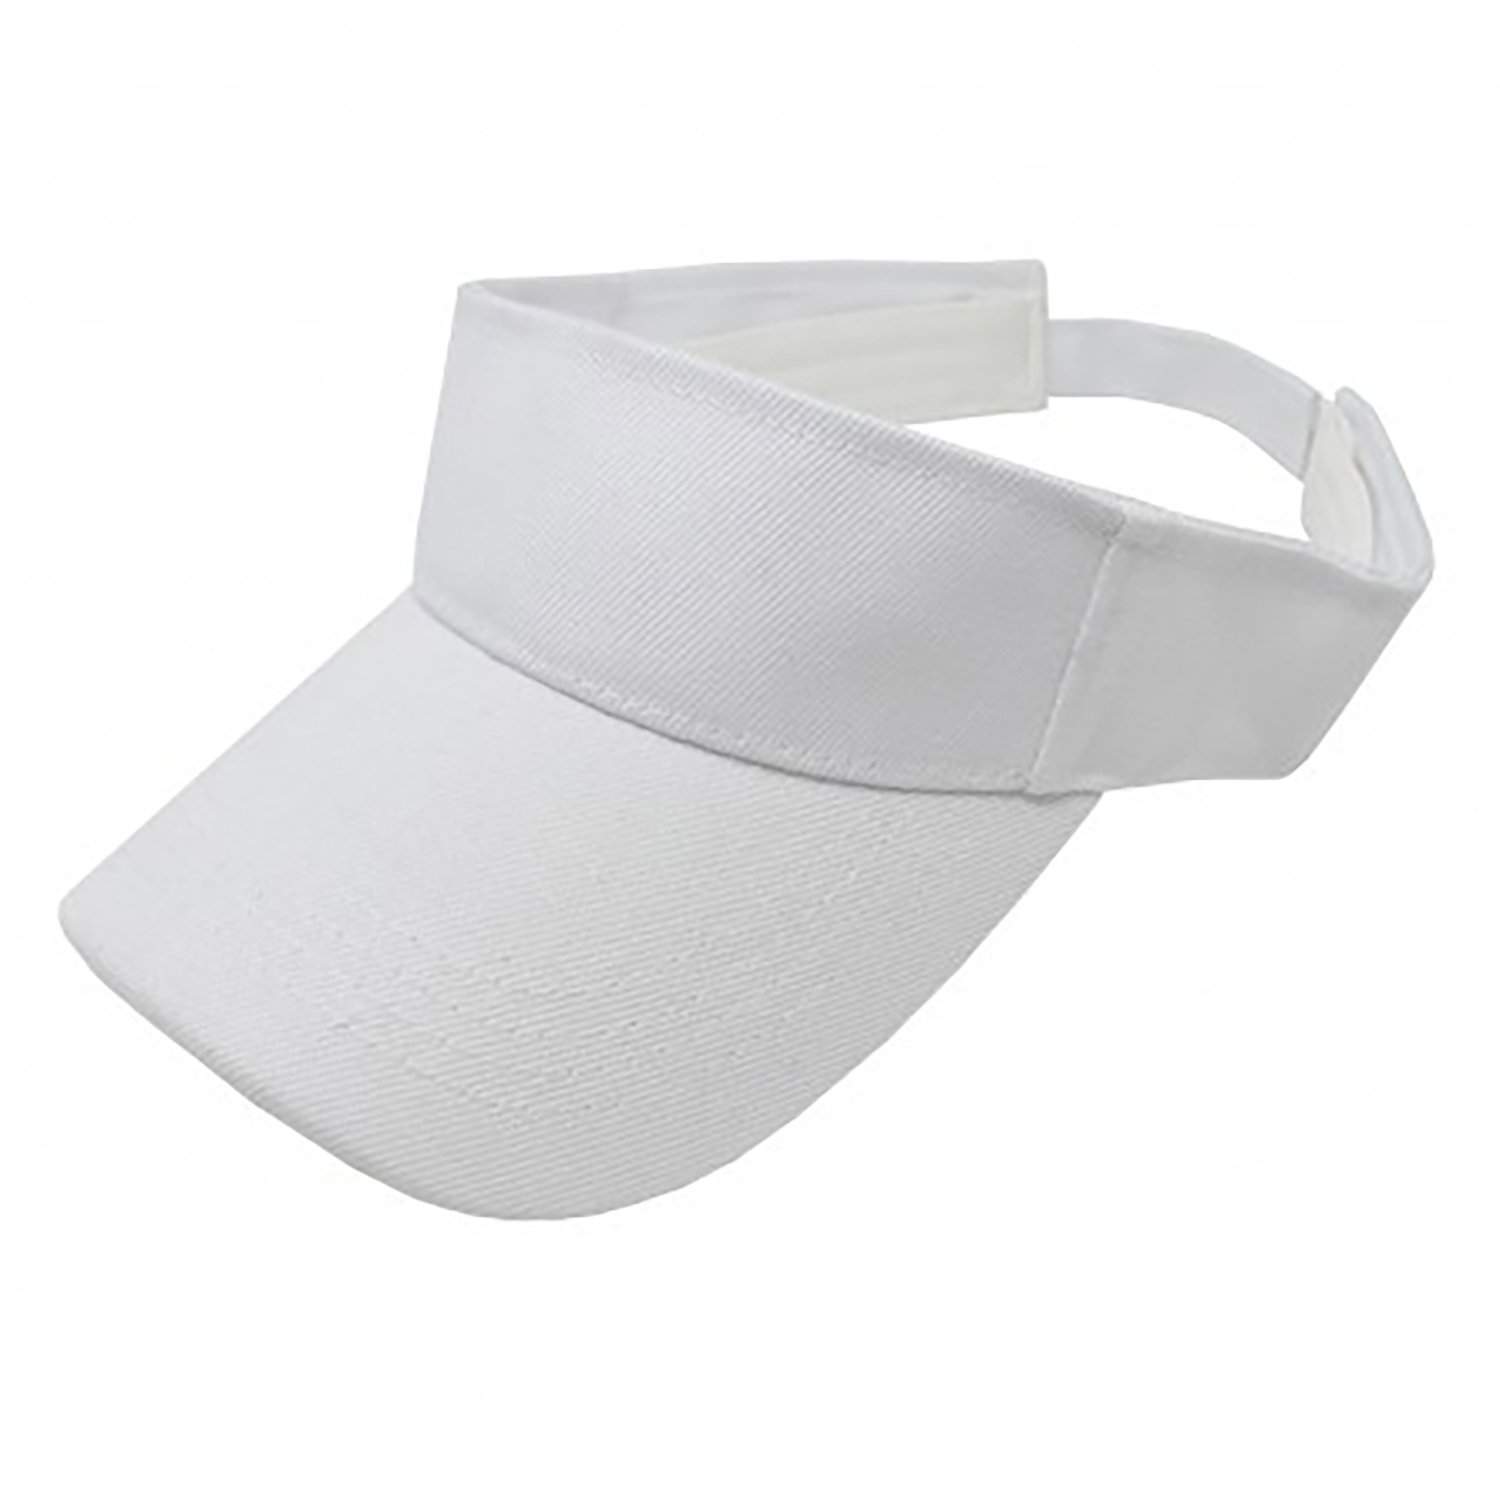 12 Pack Sun Visor Adjustable Cap Hat Athletic Wear - One Dozen